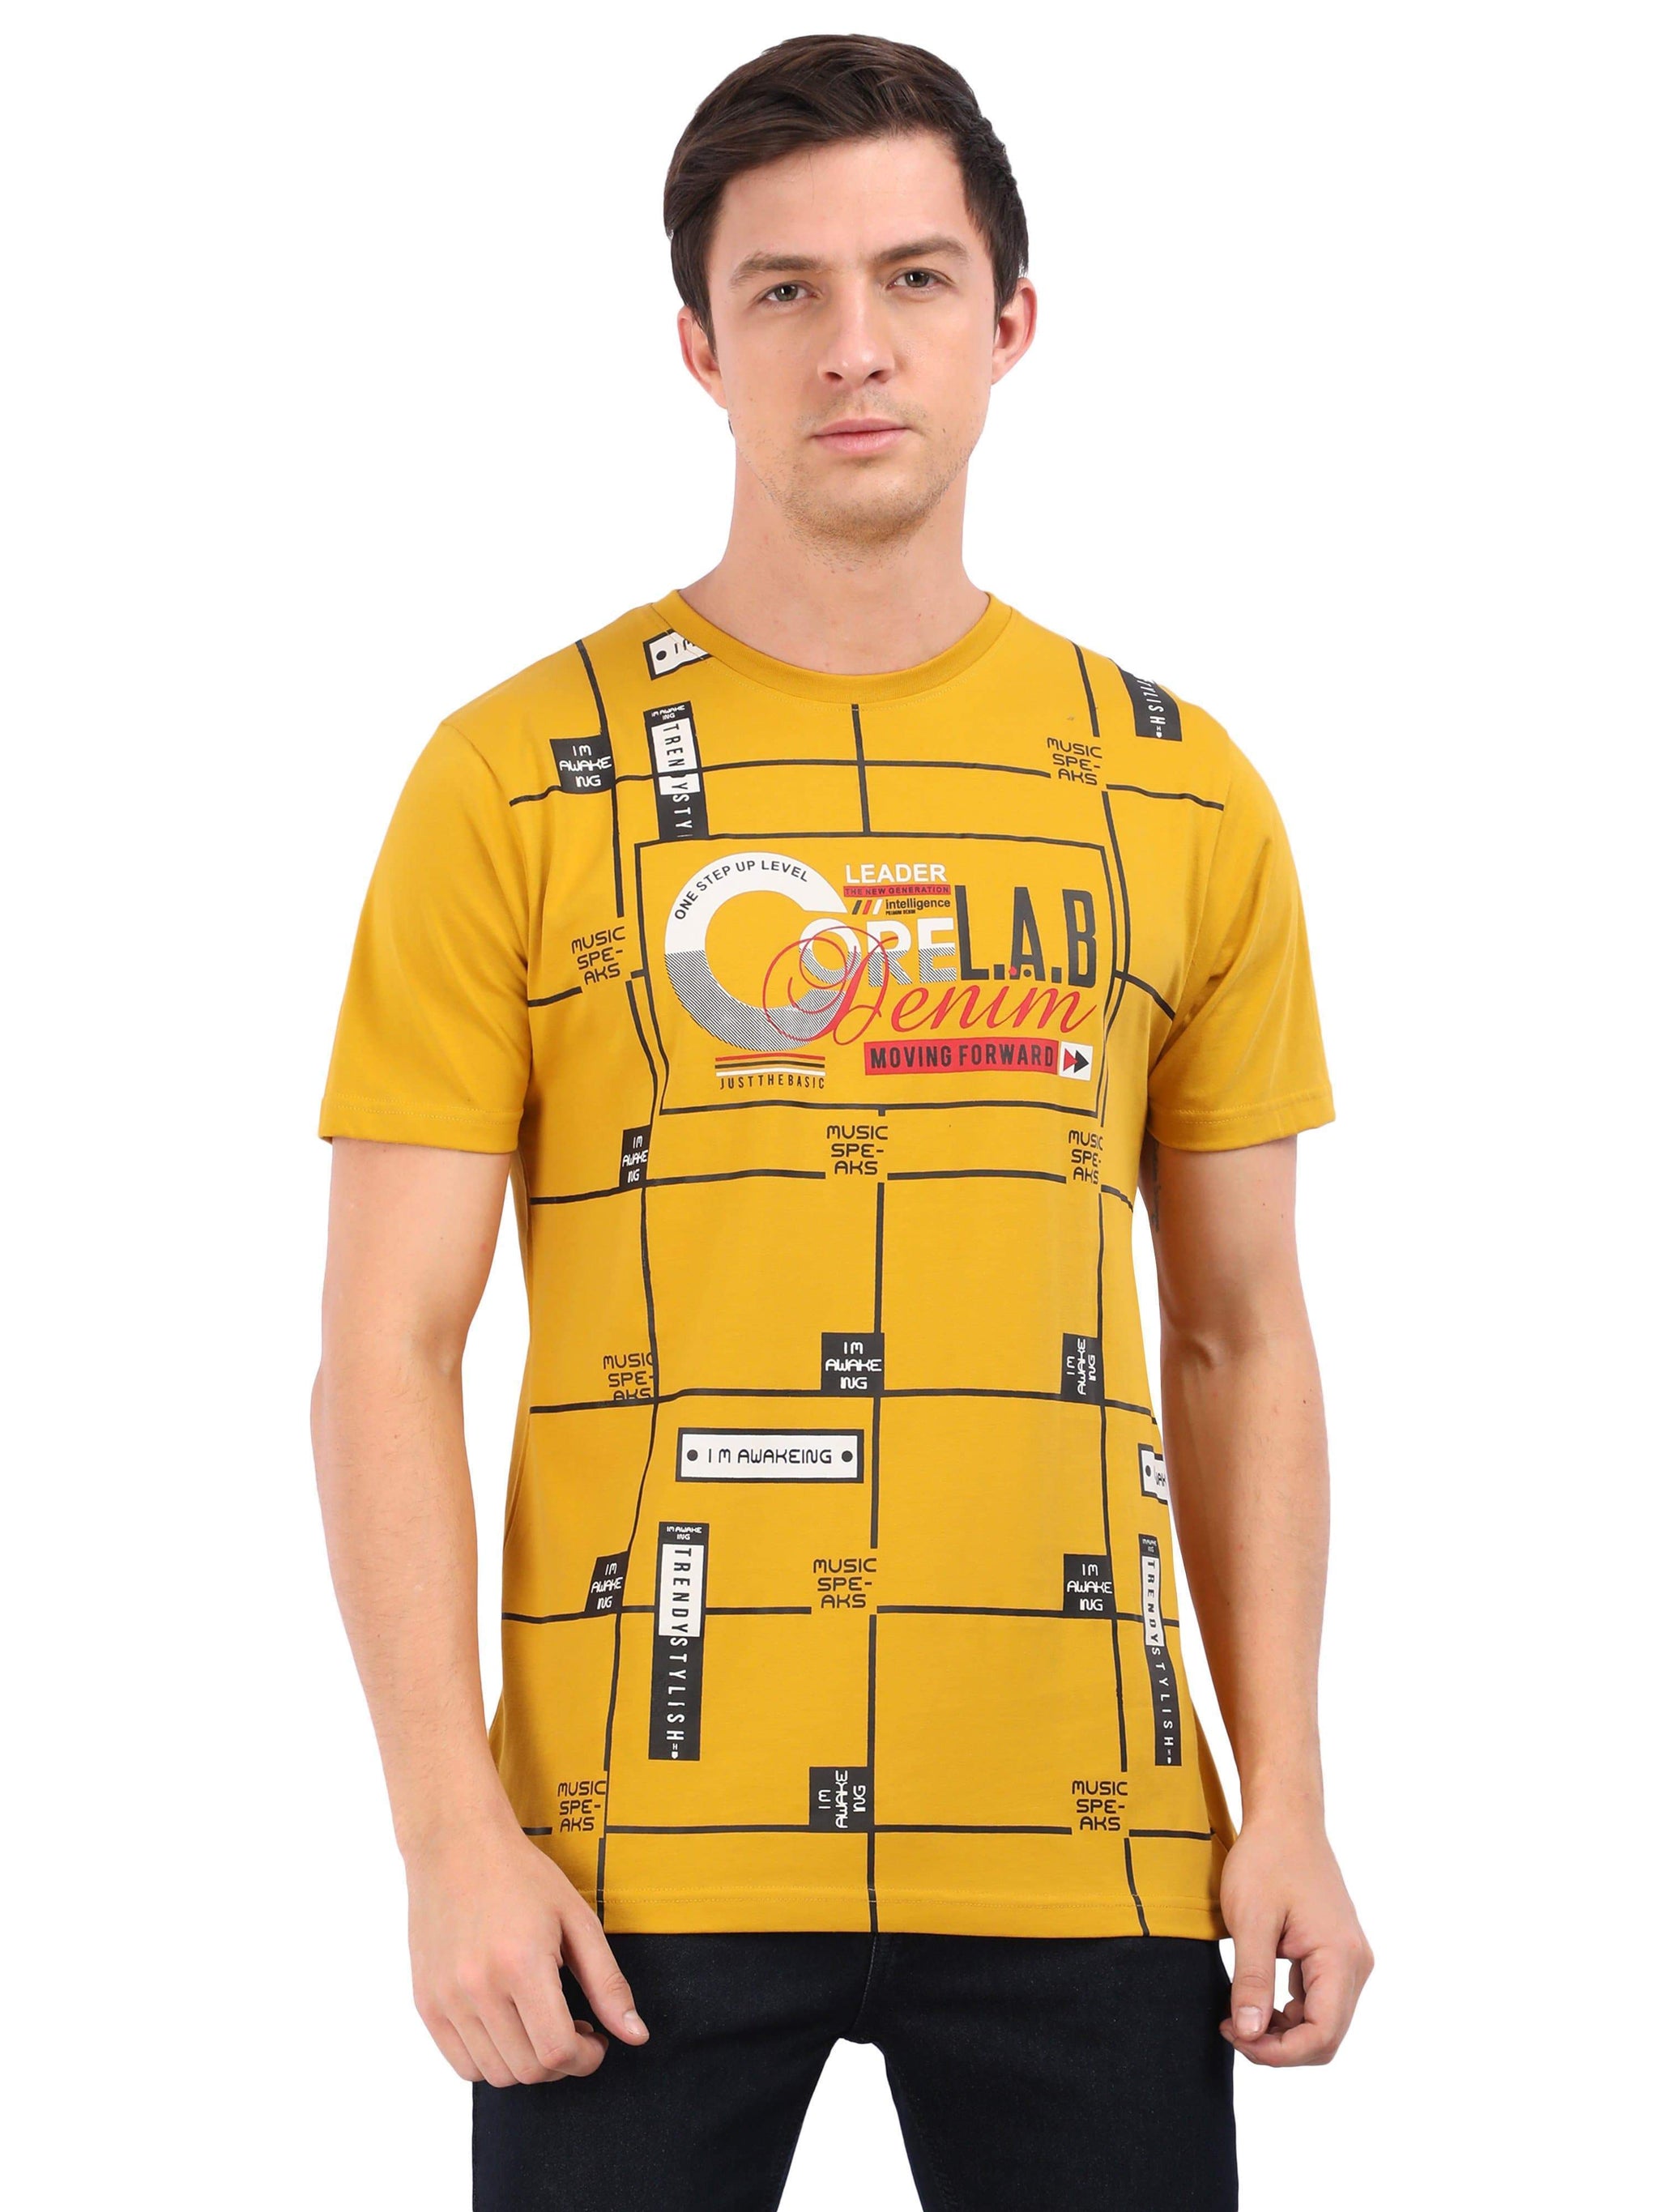 REDpockets Round Neck Yellow Cotton Printed TShirt For Men R007 REDpockets